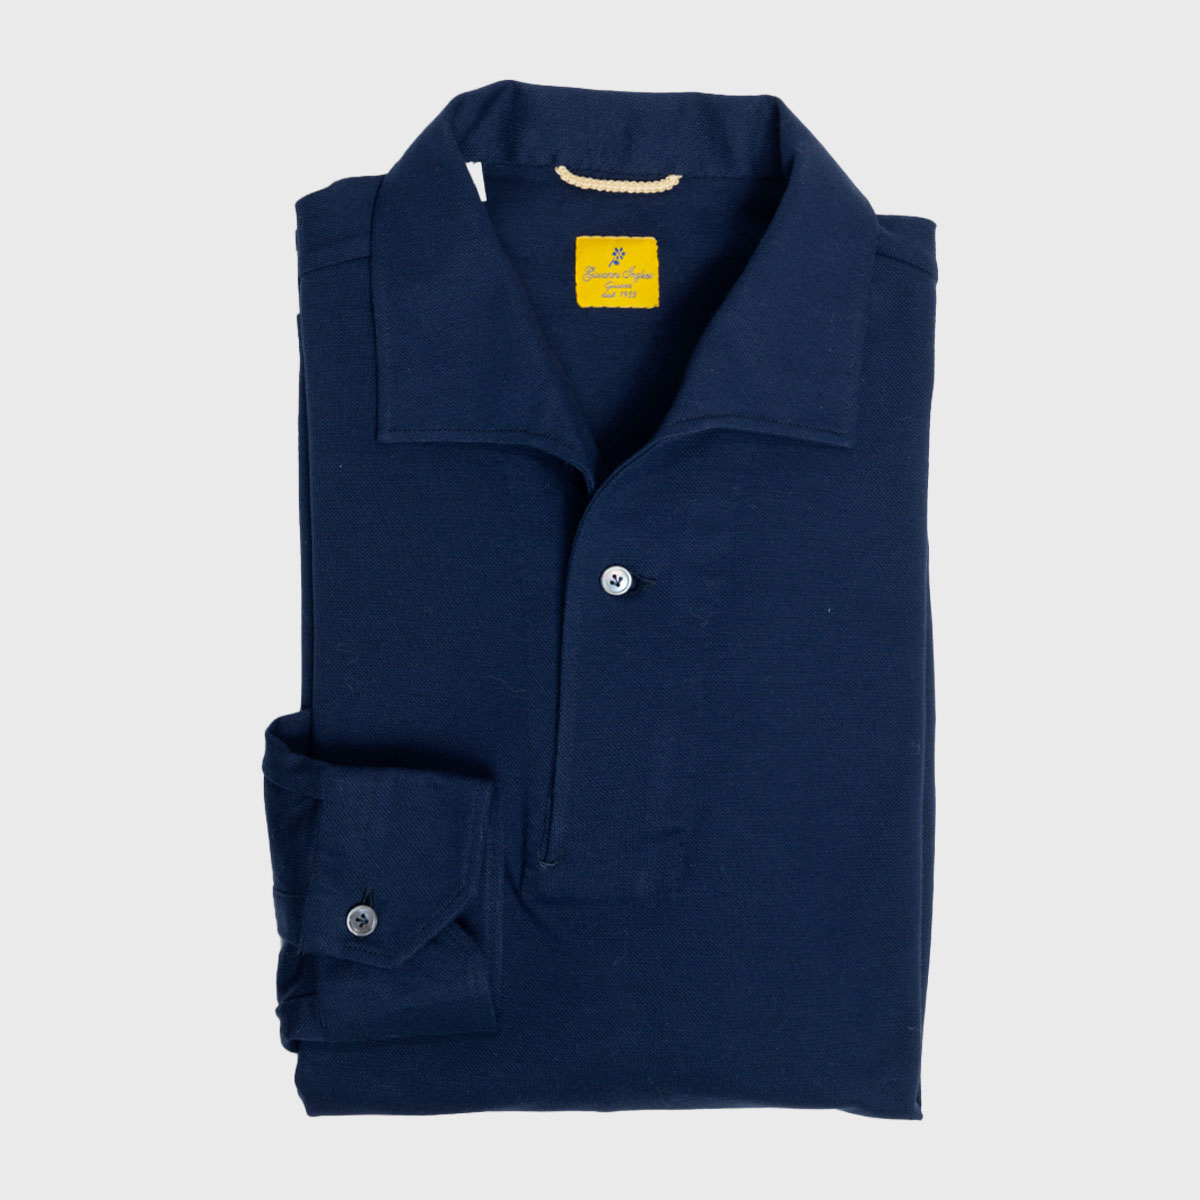 Miami Collar Piquet Polo Shirt in Navy Blue G. Inglese on sale 2022